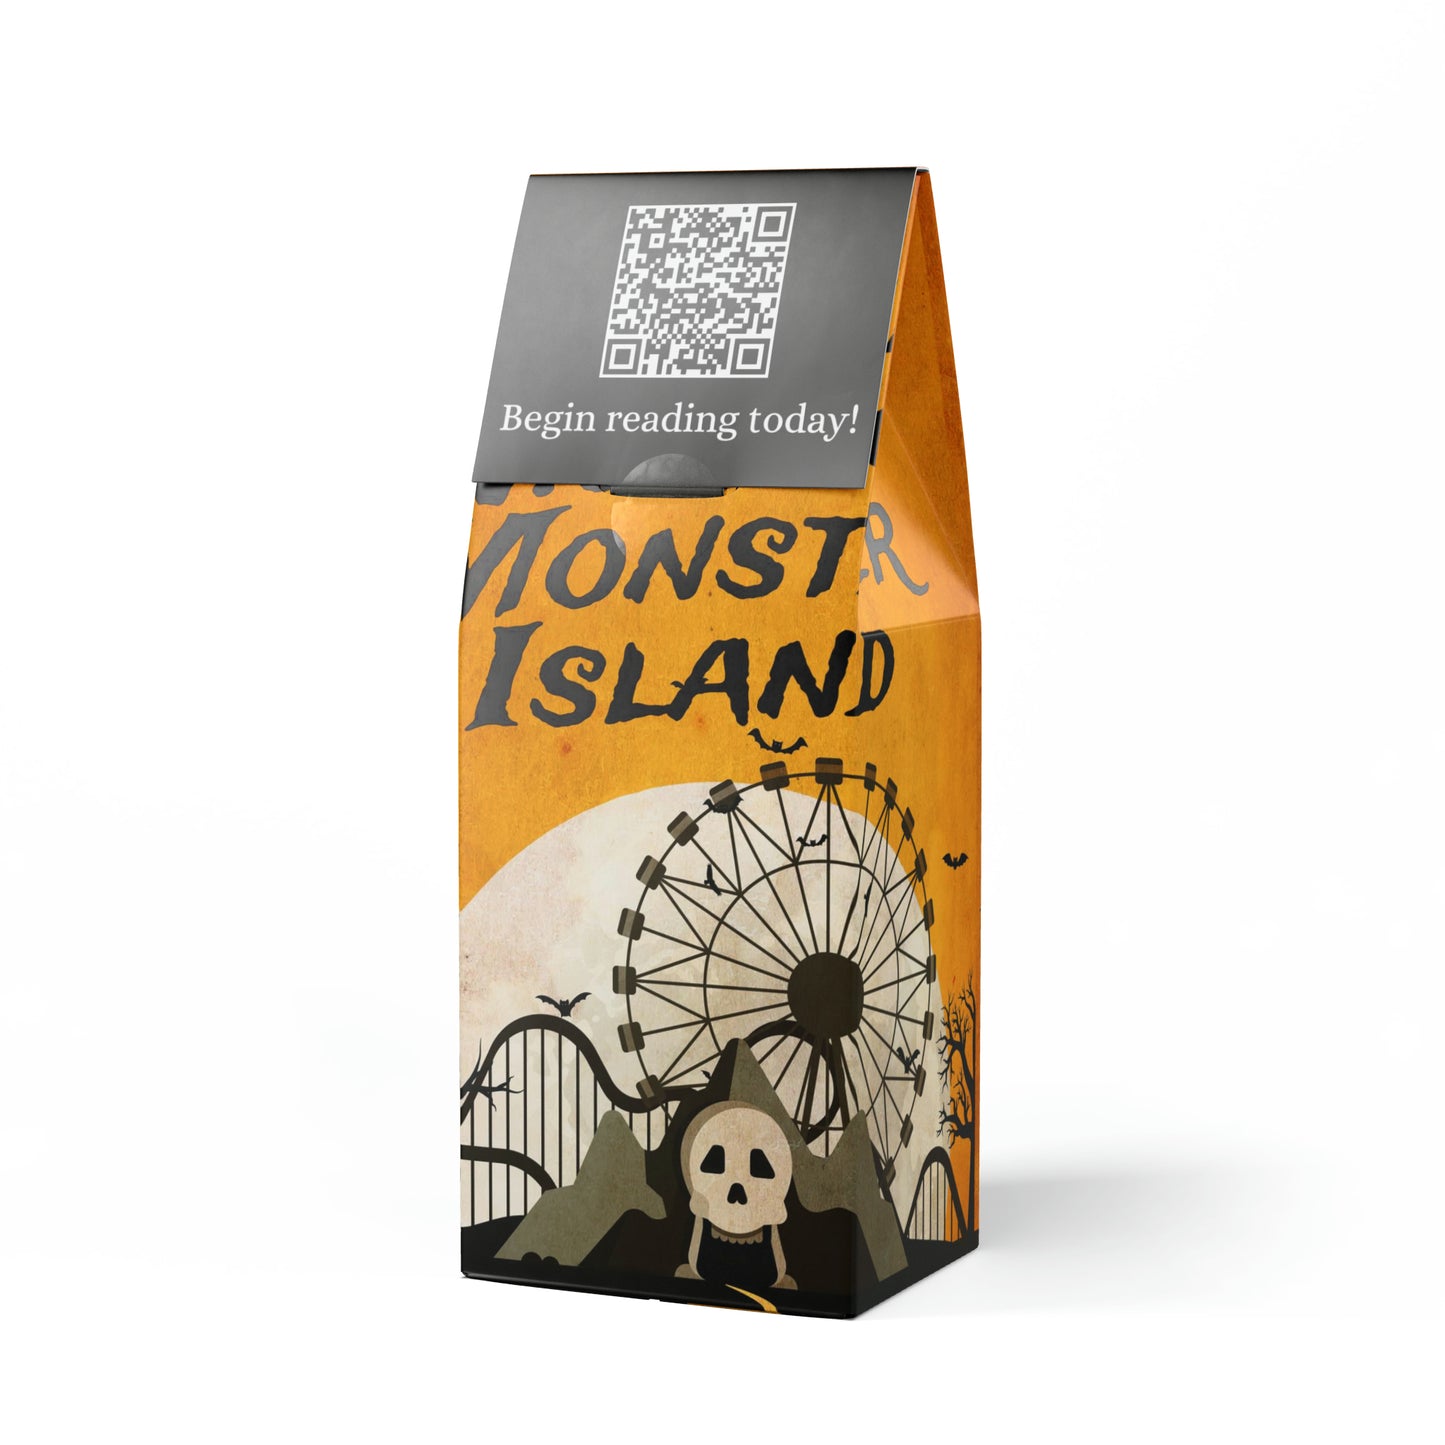 Halloween Night On Monster Island - Broken Top Coffee Blend (Medium Roast)